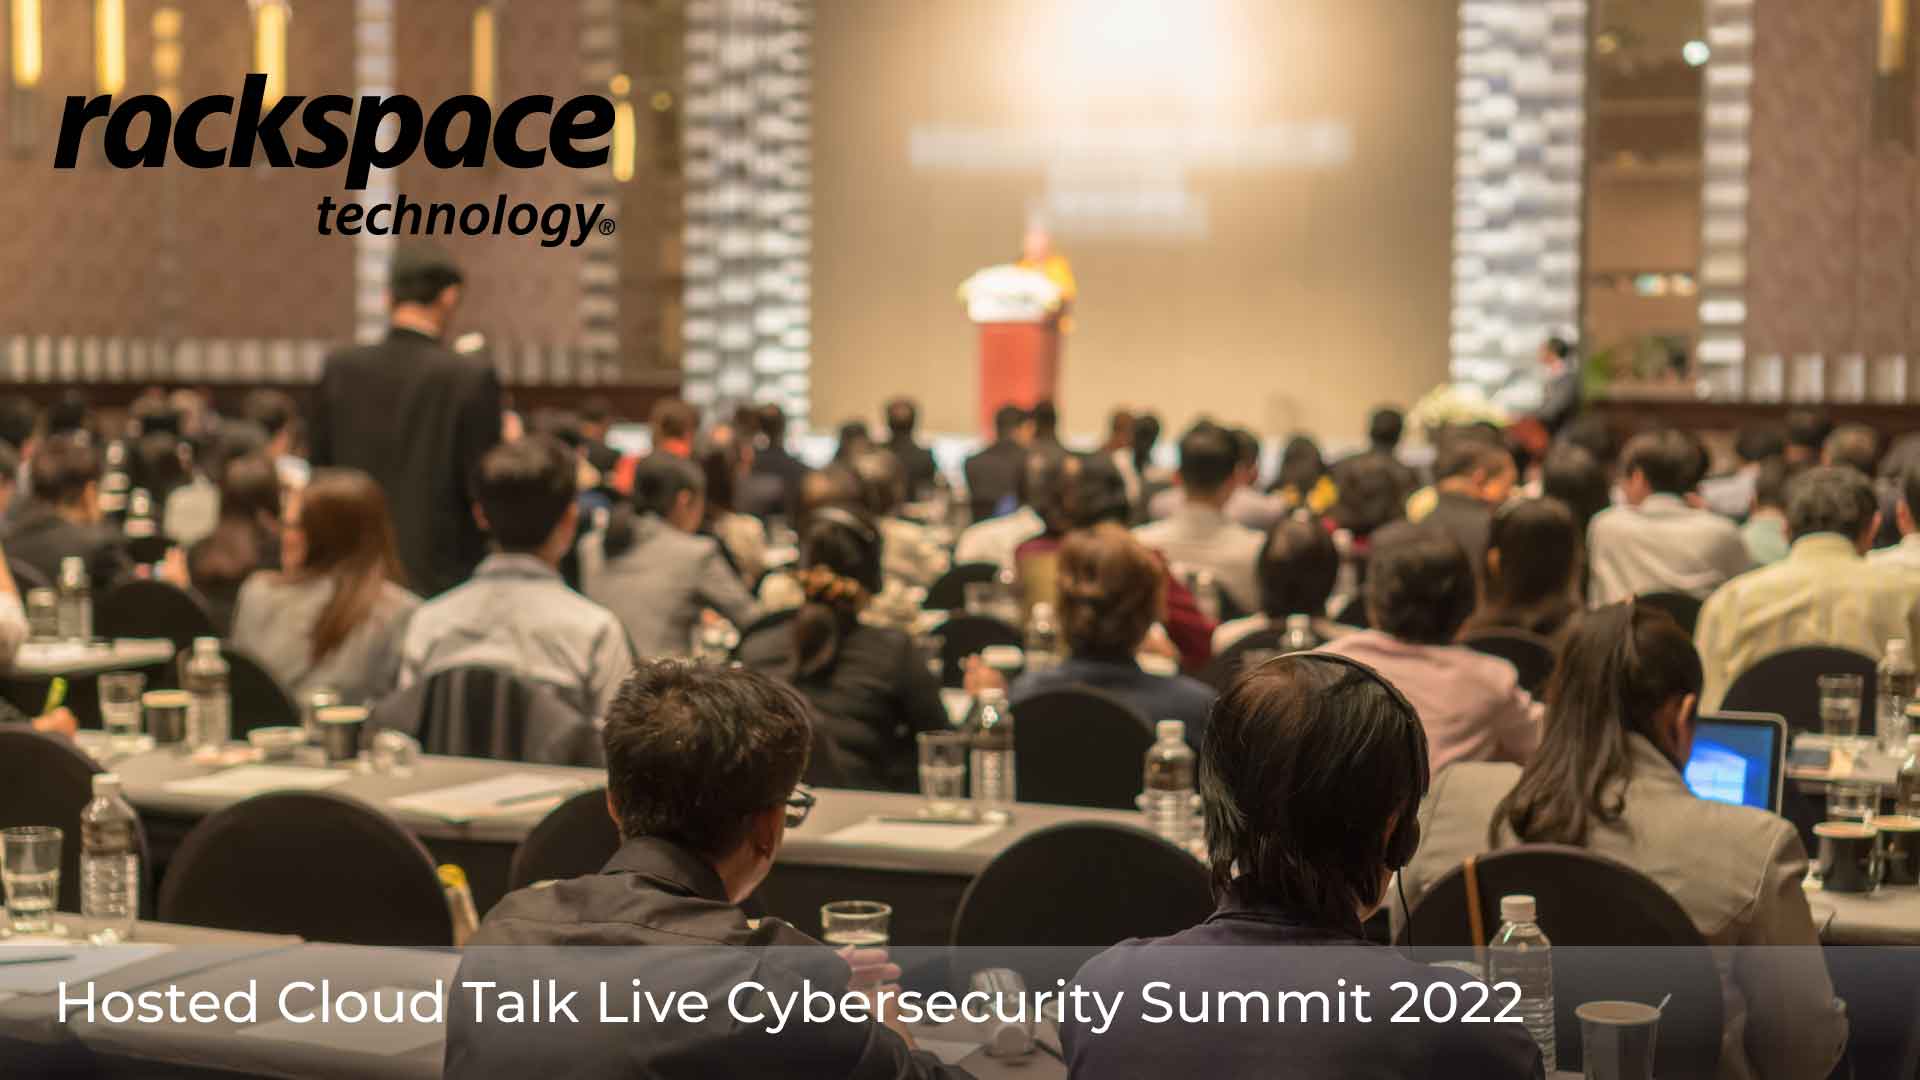 Rackspace Technology Hosts Cloud Talk Live Cybersecurity Summit 2022 in San Antonio